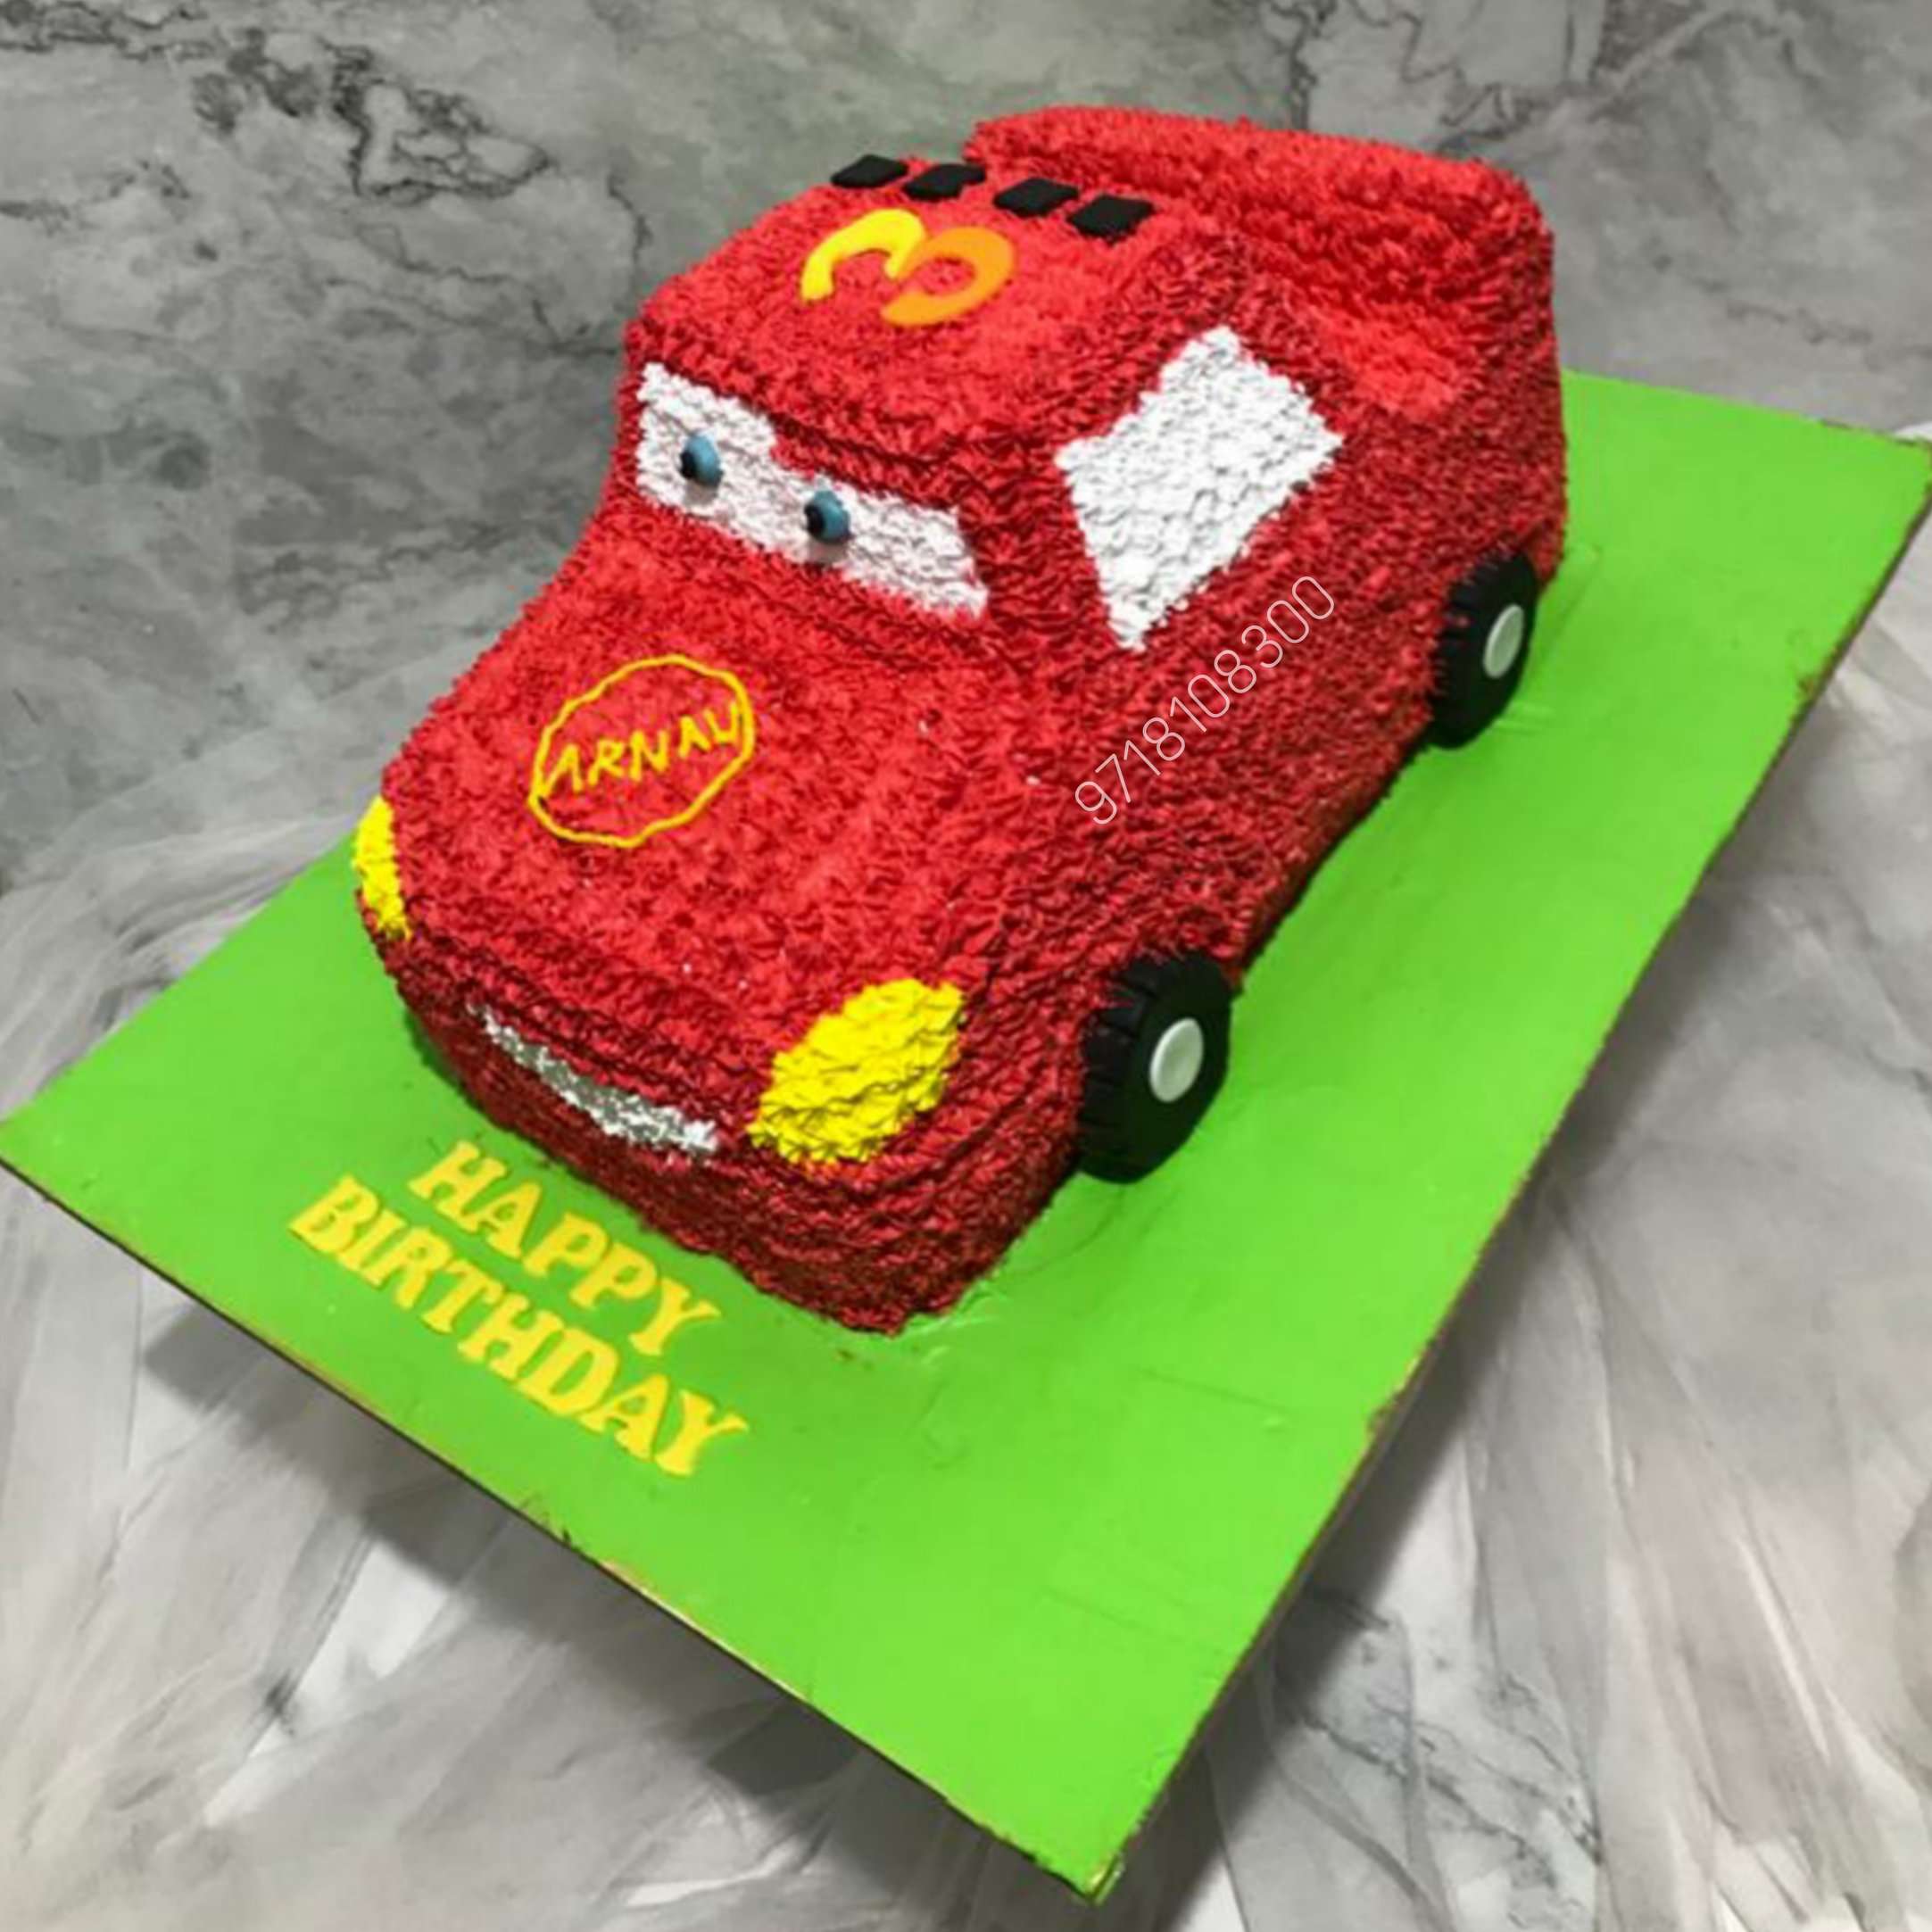 Decorated Car Cake